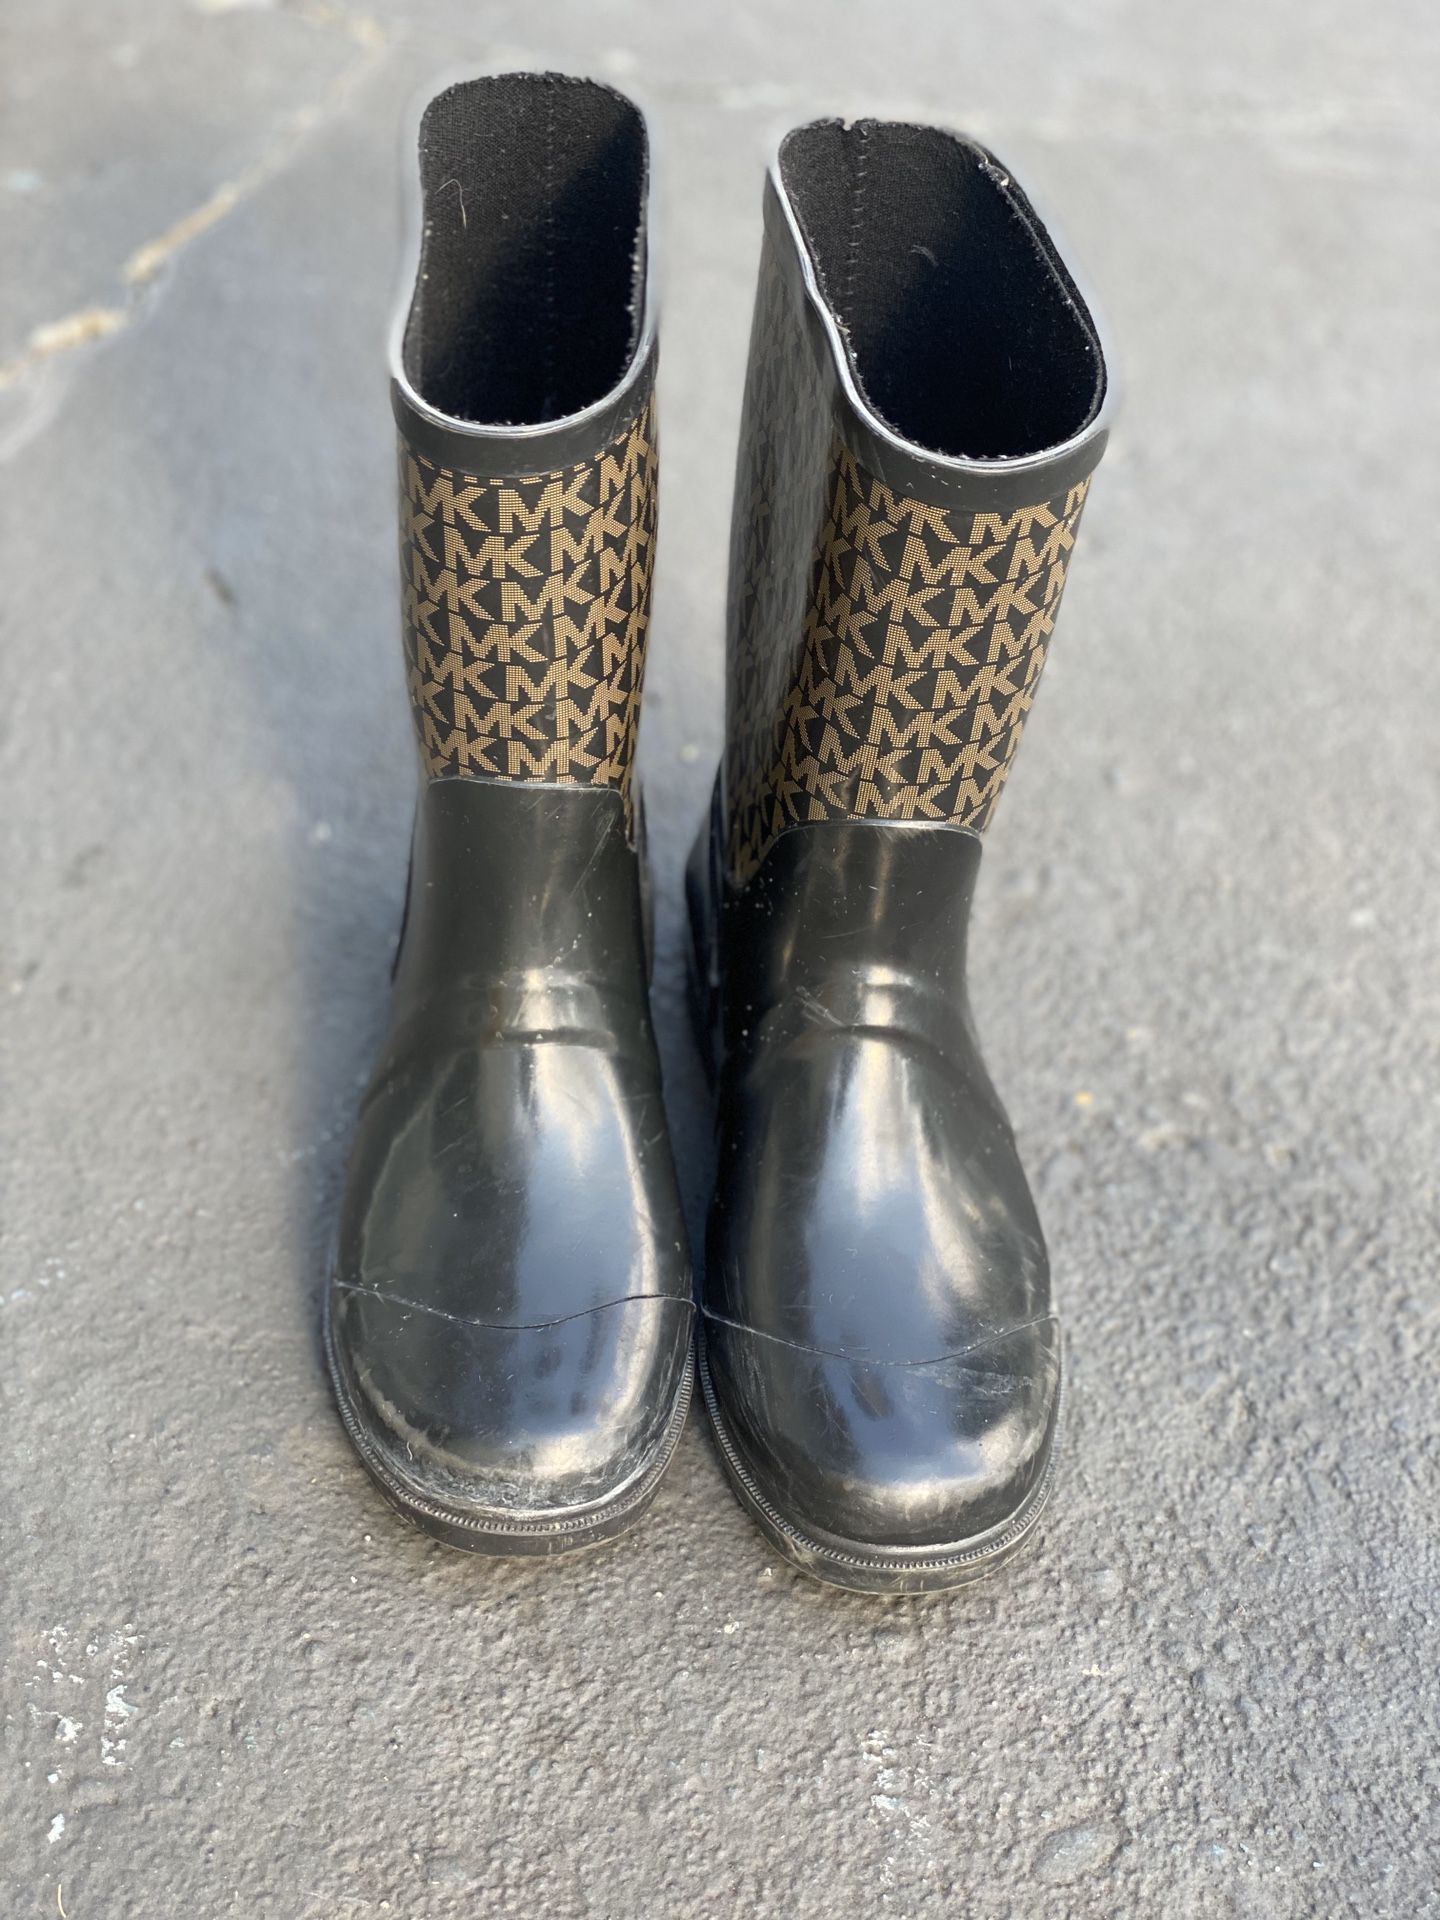 Big girls- MK rain boots